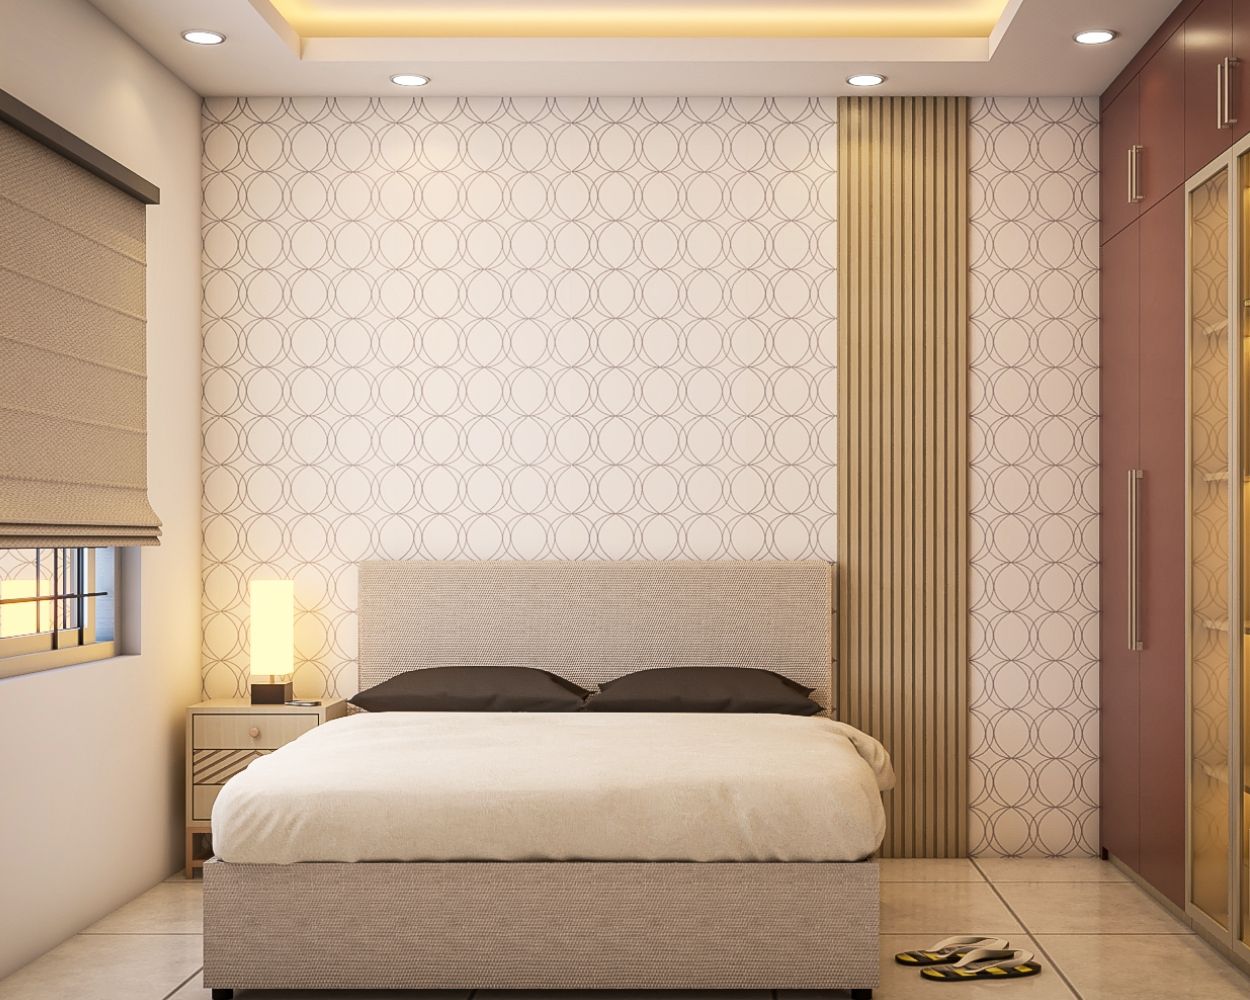 Modern White And Black Geometric Circular Bedroom Wallpaper Design